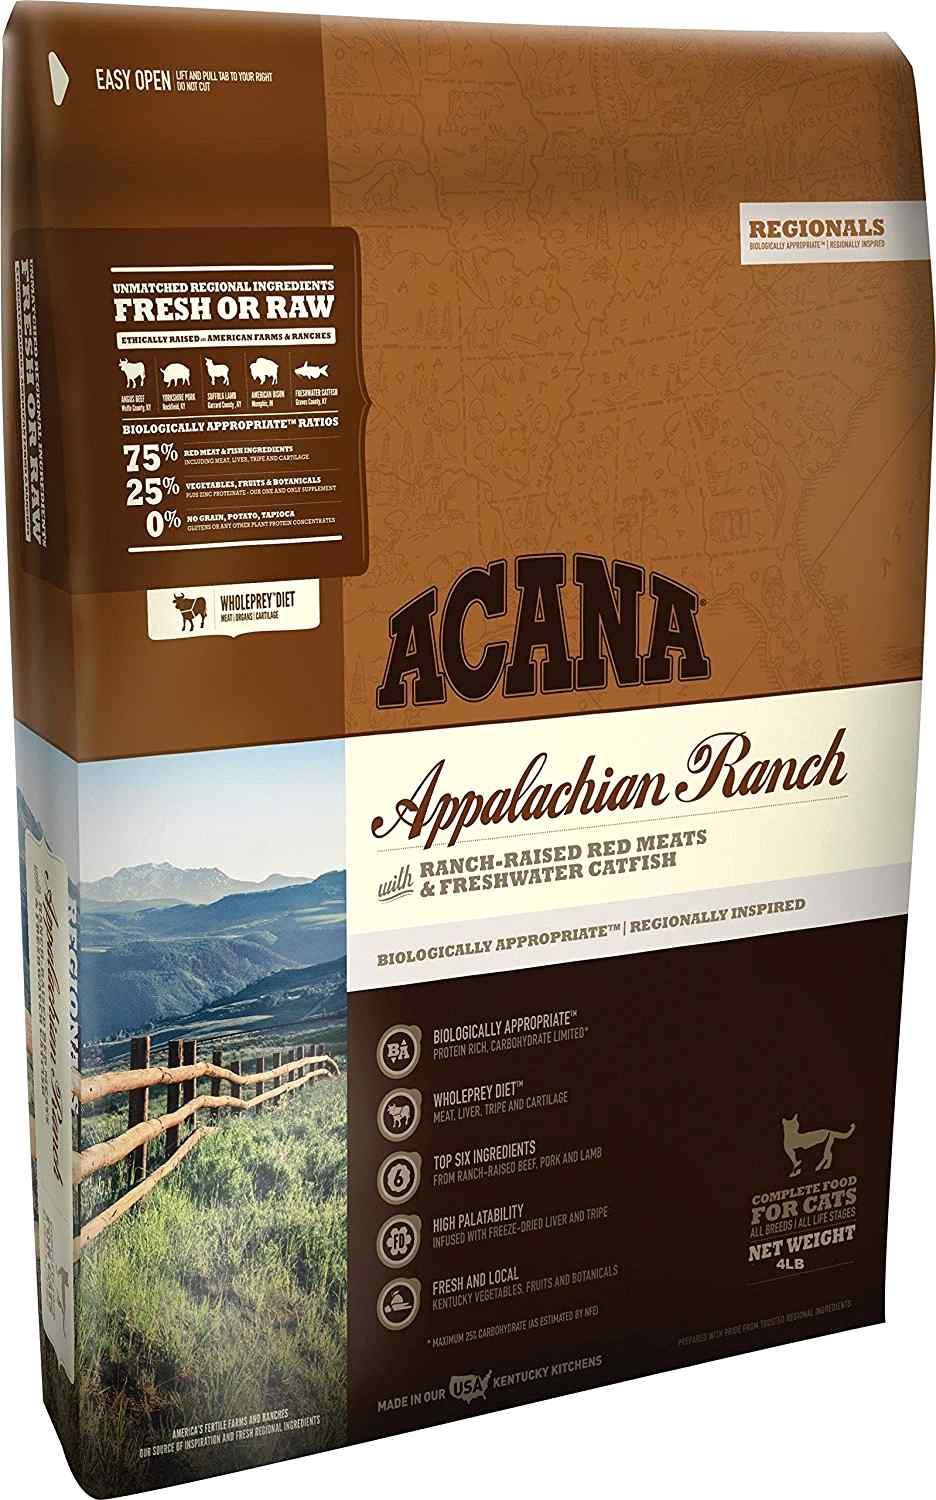 183 Appalanchian ranch beef, lamb,